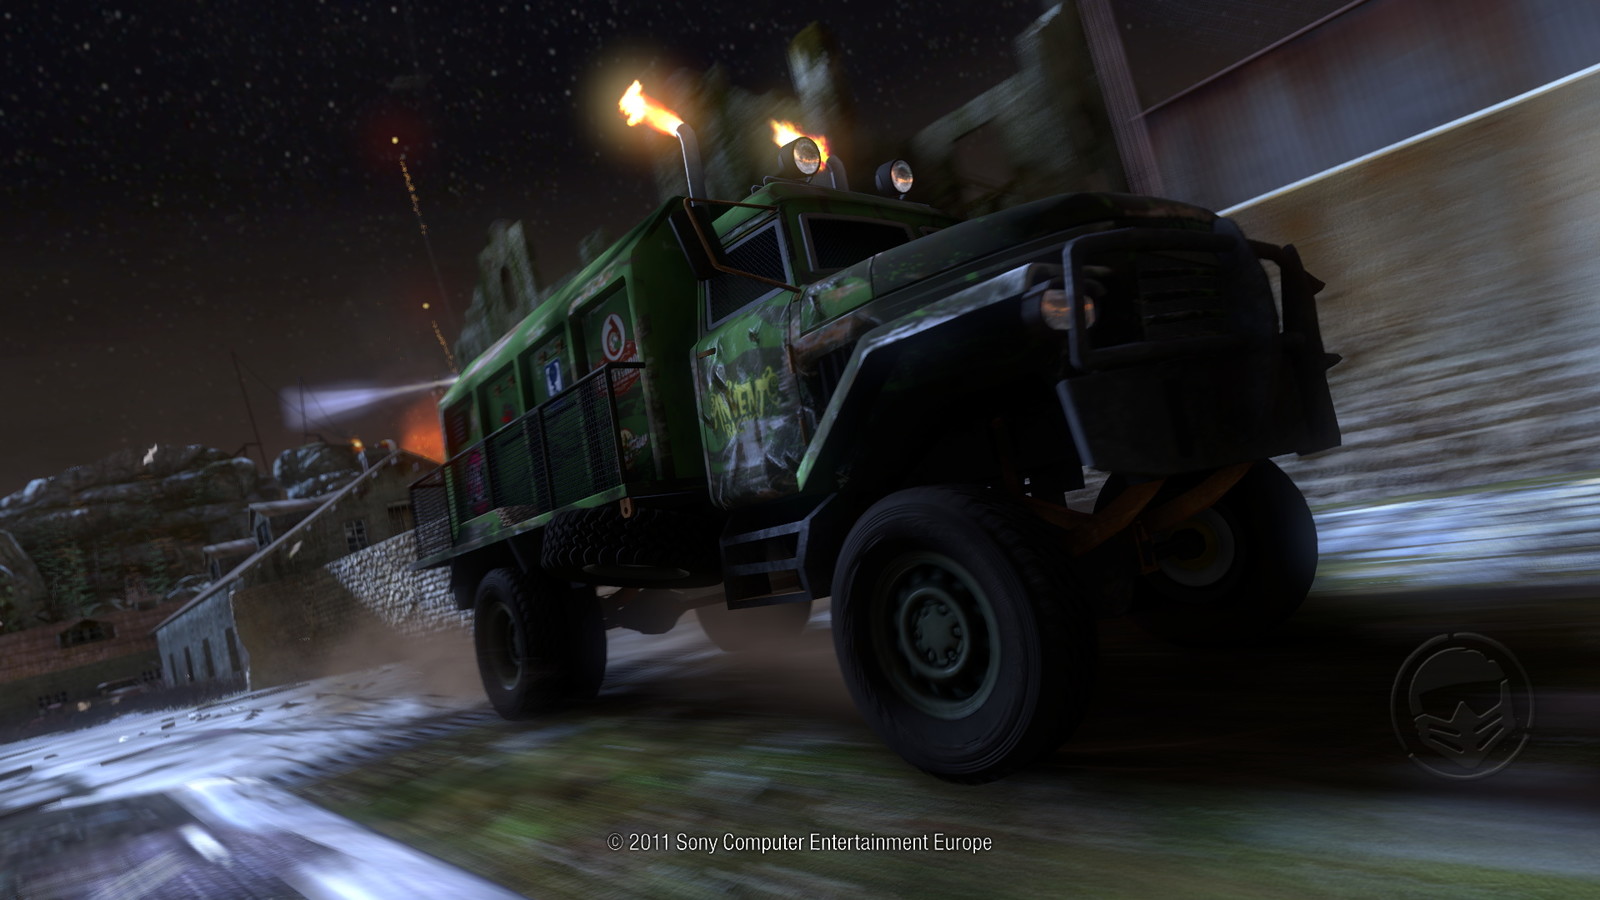 Molotov Shelka
(In-game screenshot)